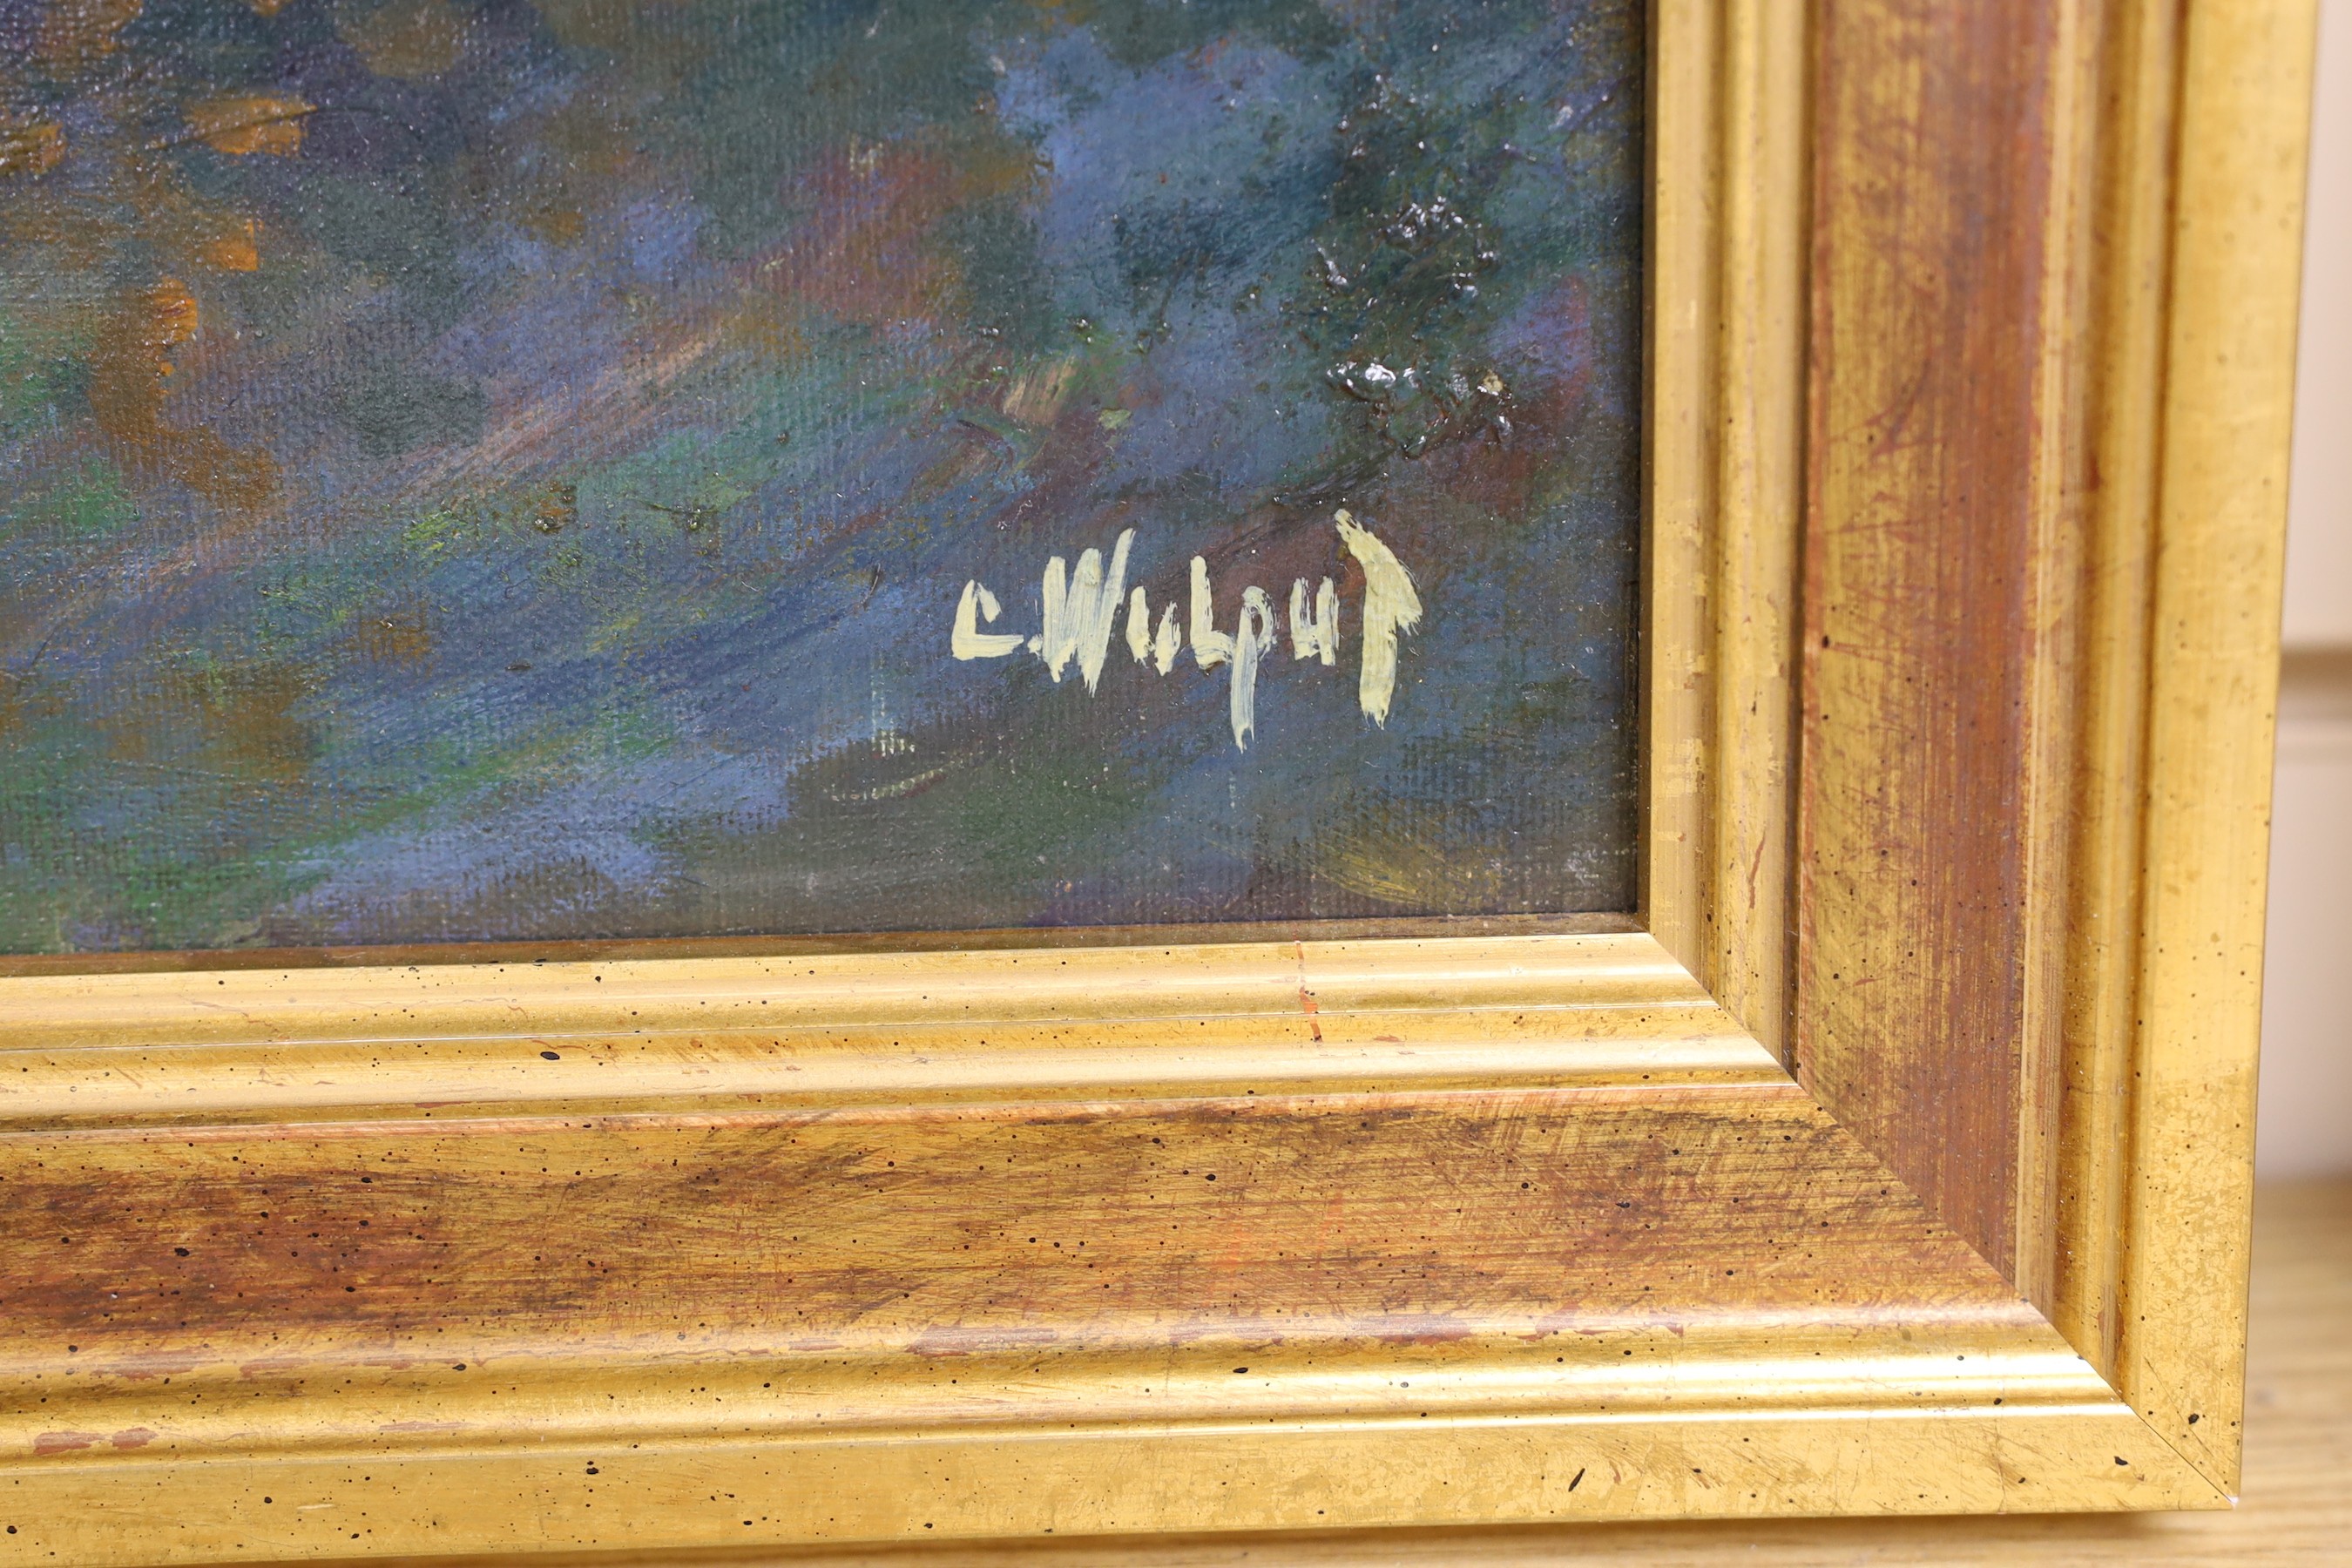 C. Wulput, oil on canvas, Heathland landscape, signed, 40 x 59cm